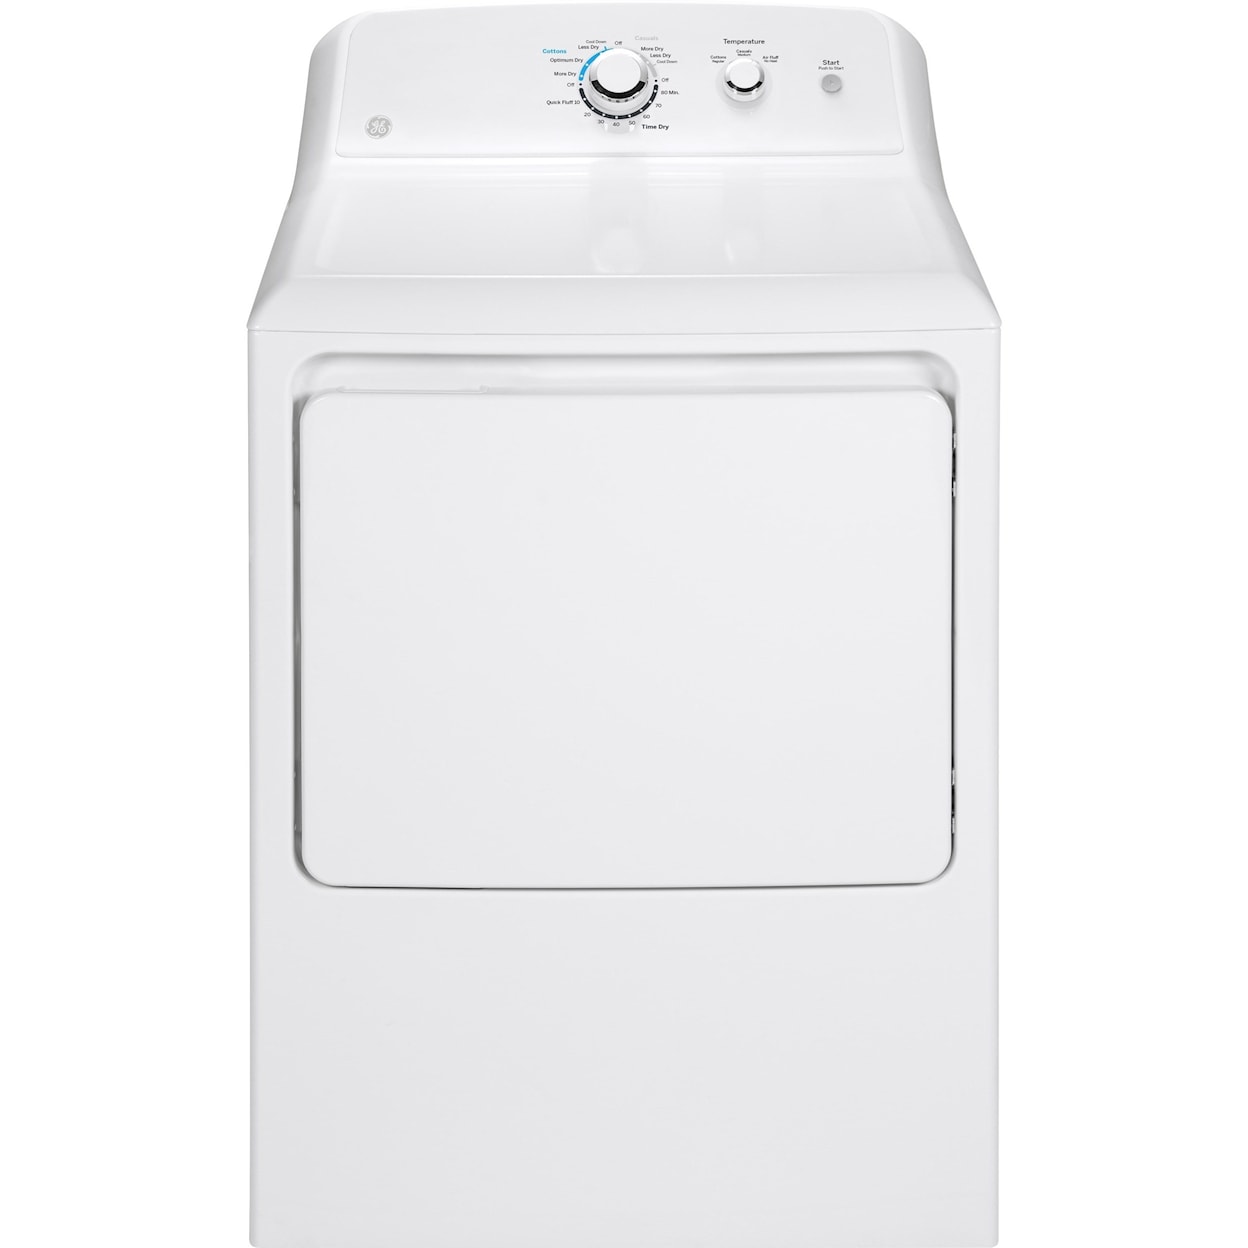 GE Appliances GE Electric Dryers 7.2 Cu. Ft. Capacity Aluminized Alloy Dryer